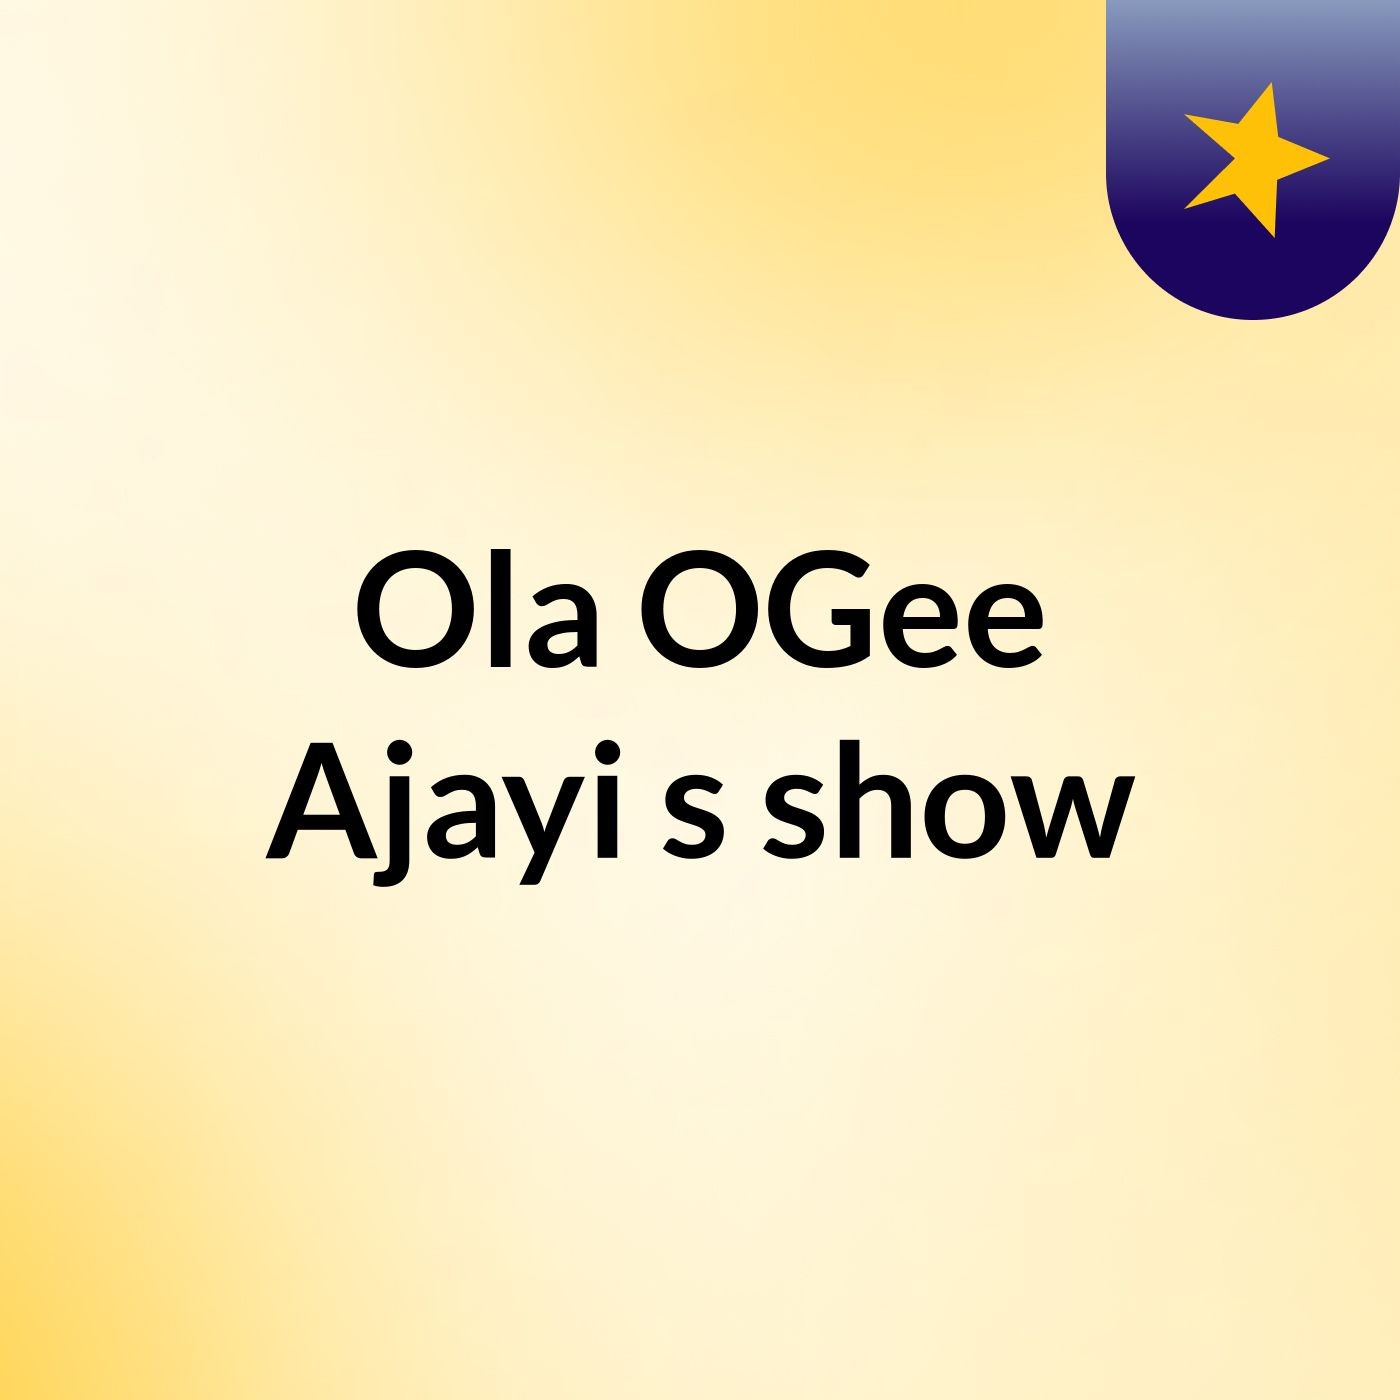 Episode 3 - Ola OGee Ajayi's show